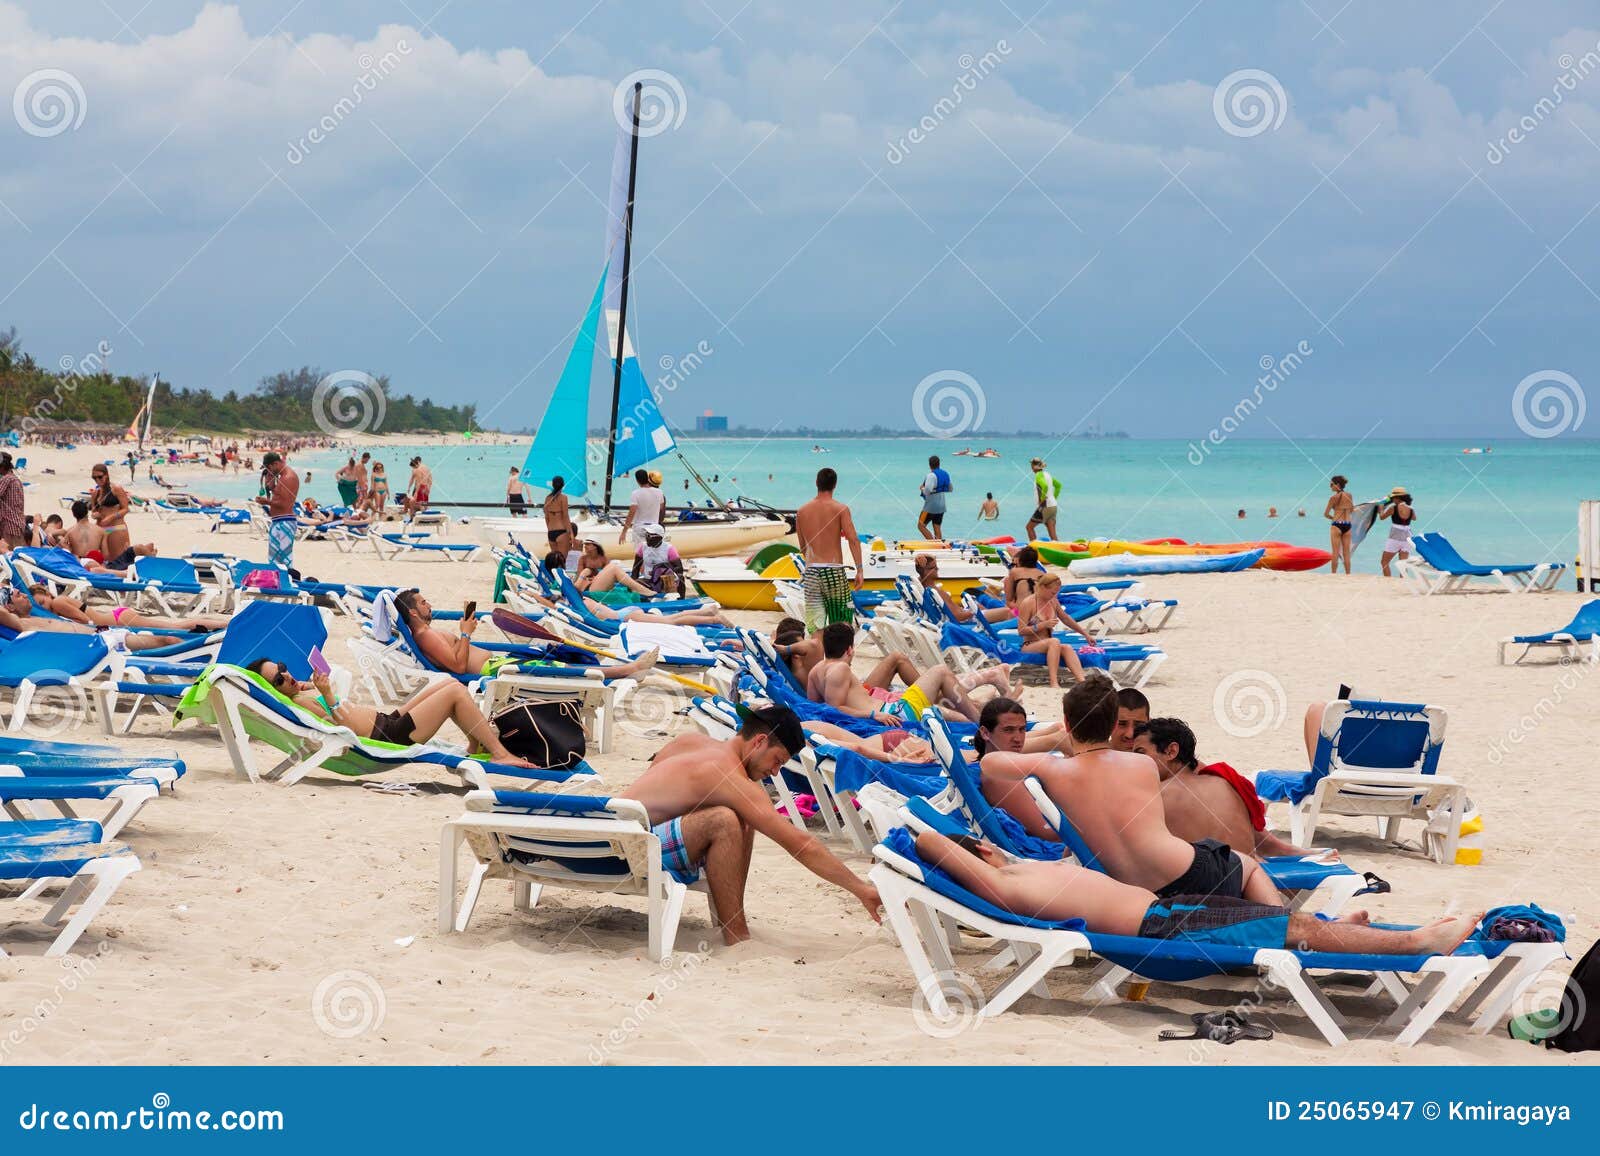 Tourists Enjoying The Beach At Cuba Editorial Photography - Image of enjoy,  boat: 25065947